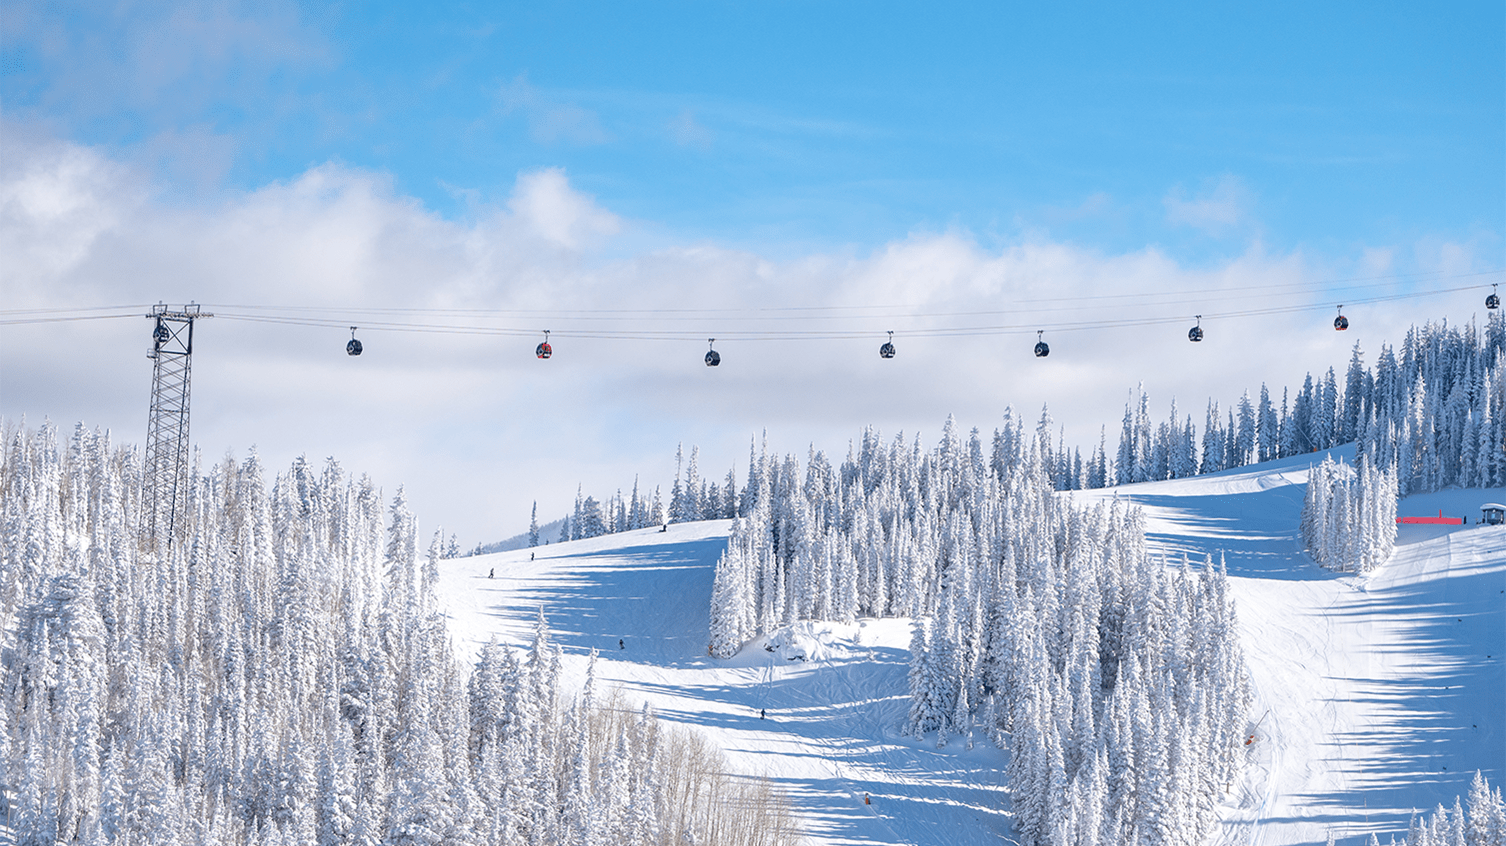 Silver Queen Gondola high above the snowy runs of Aspen Mountain, on a glorious blue bird day, snow covering the trees